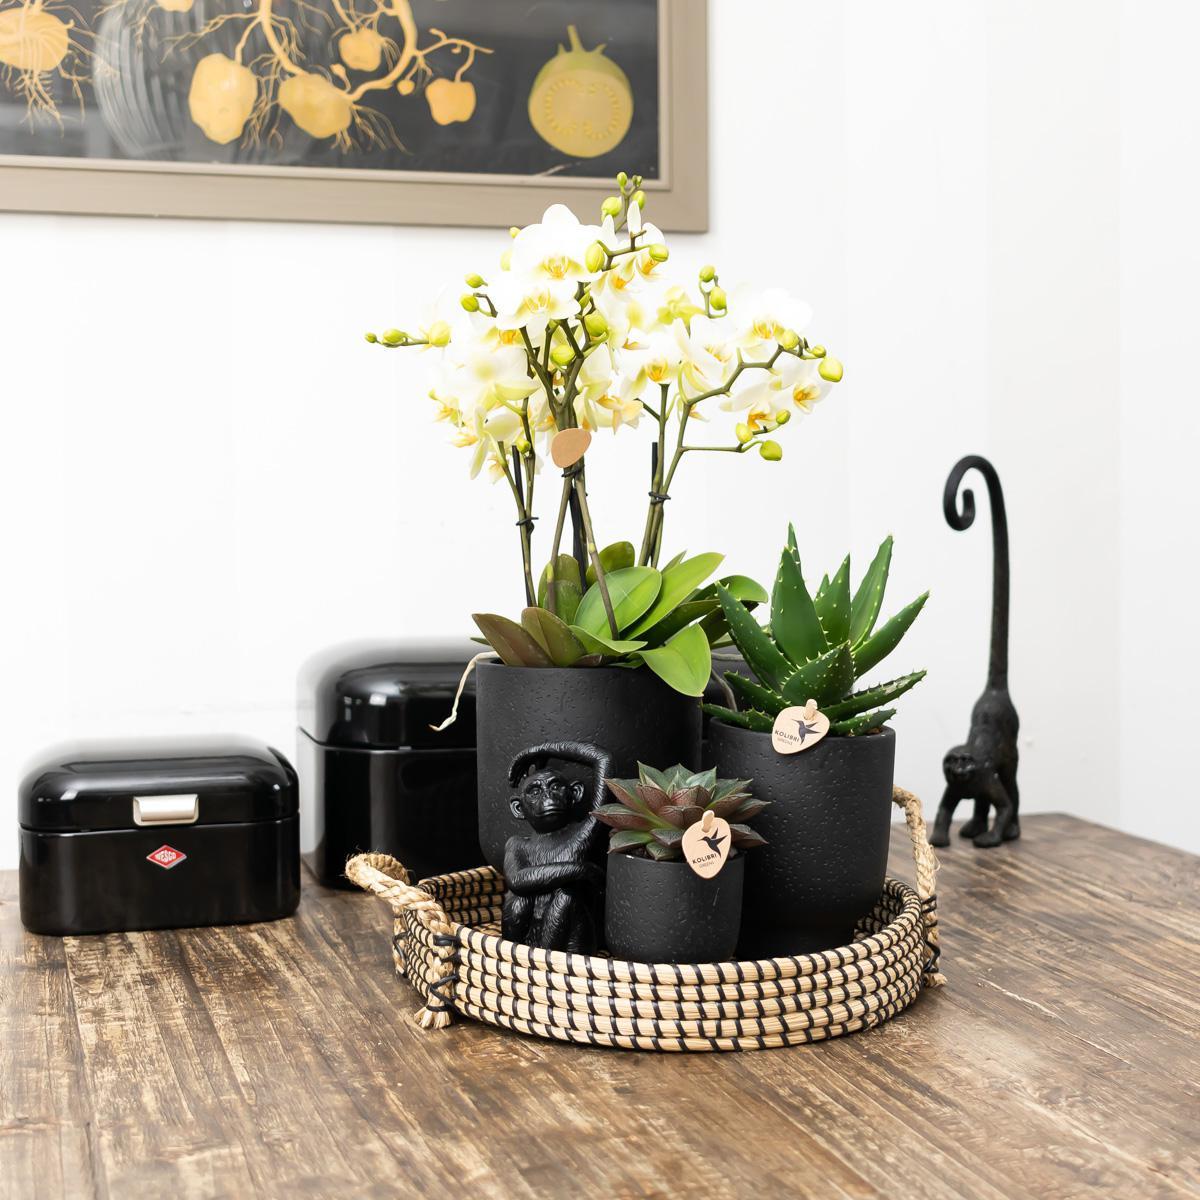 Kolibri Home | Ornament - Decoratie beeld Sitting Monkey zwart